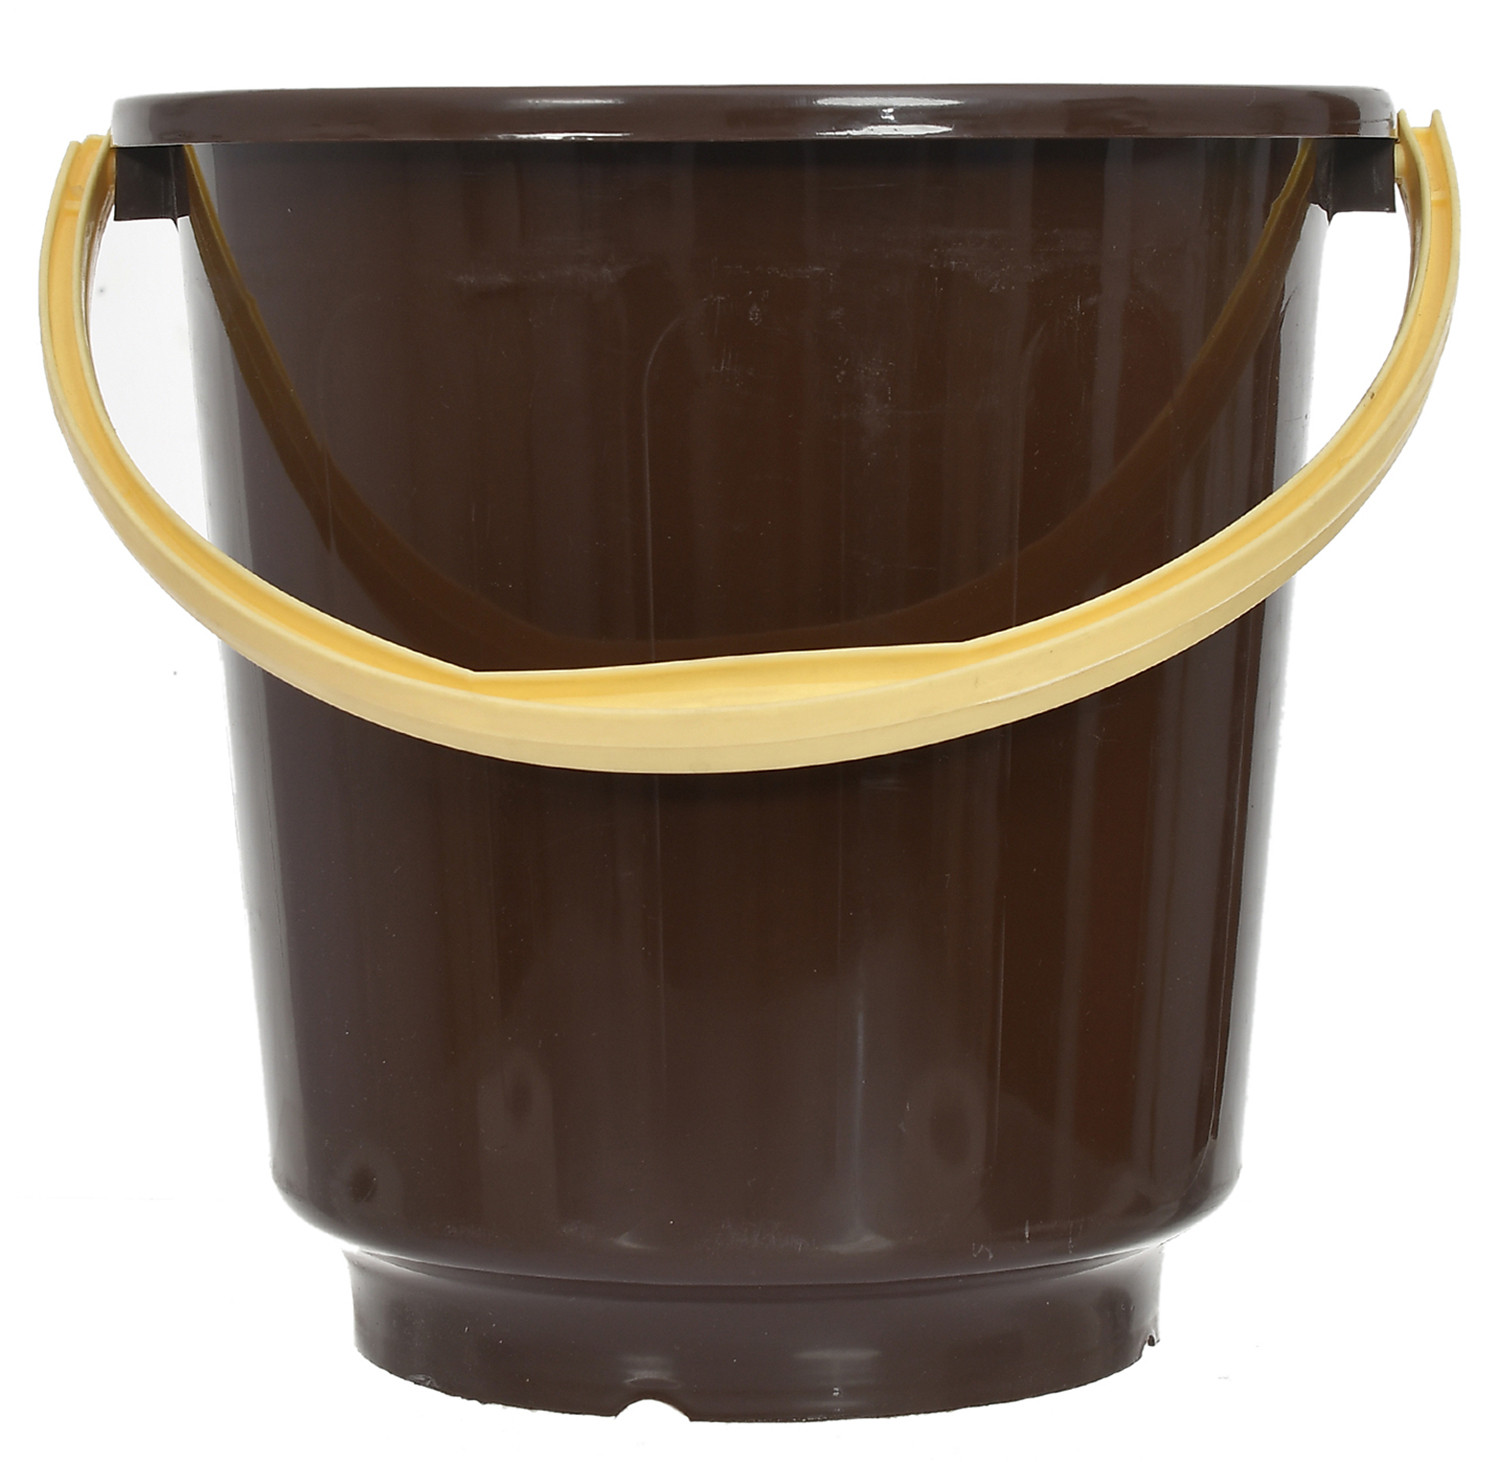 Kuber Industries Multipurposes Plastic Bucket For Bathing Home Cleaning & Storage Purpose, 16Ltr. (Brown)-47KM01205